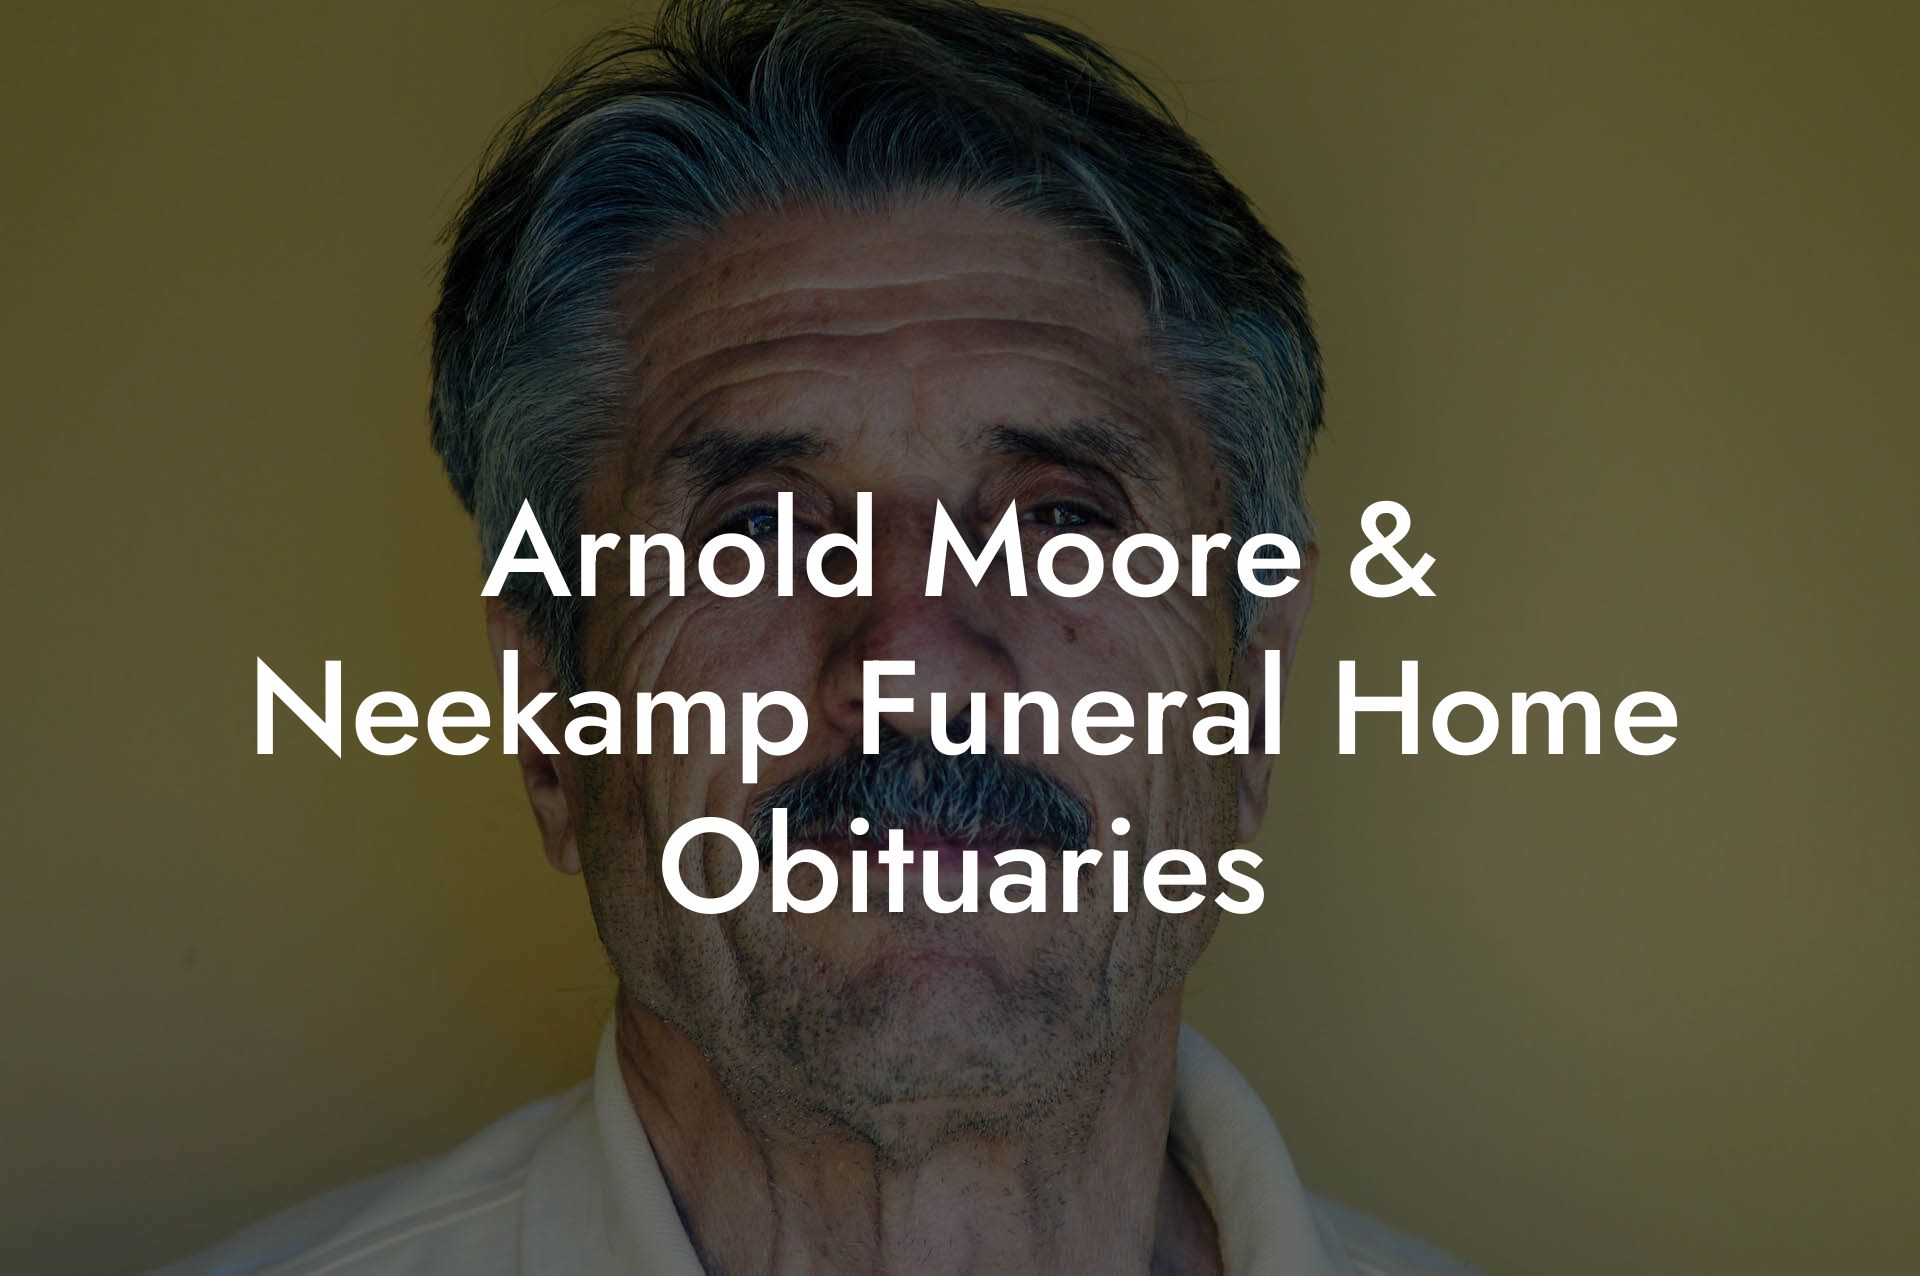 Arnold Moore & Neekamp Funeral Home Obituaries